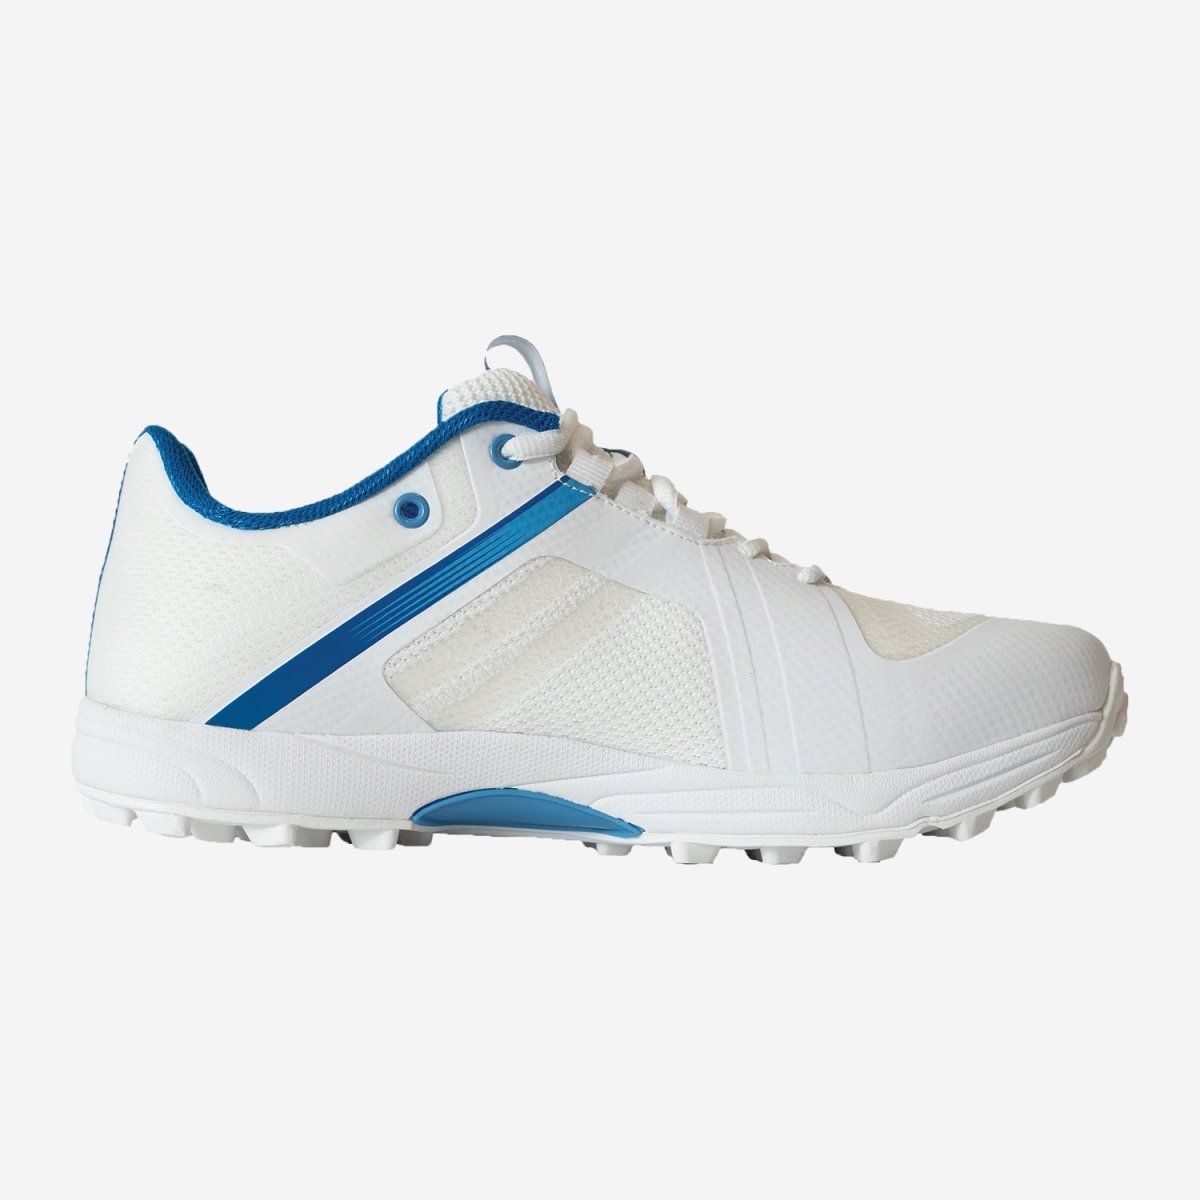 Kookaburra Pro 2.0 Rubber Cricket Shoes - White/ Blue